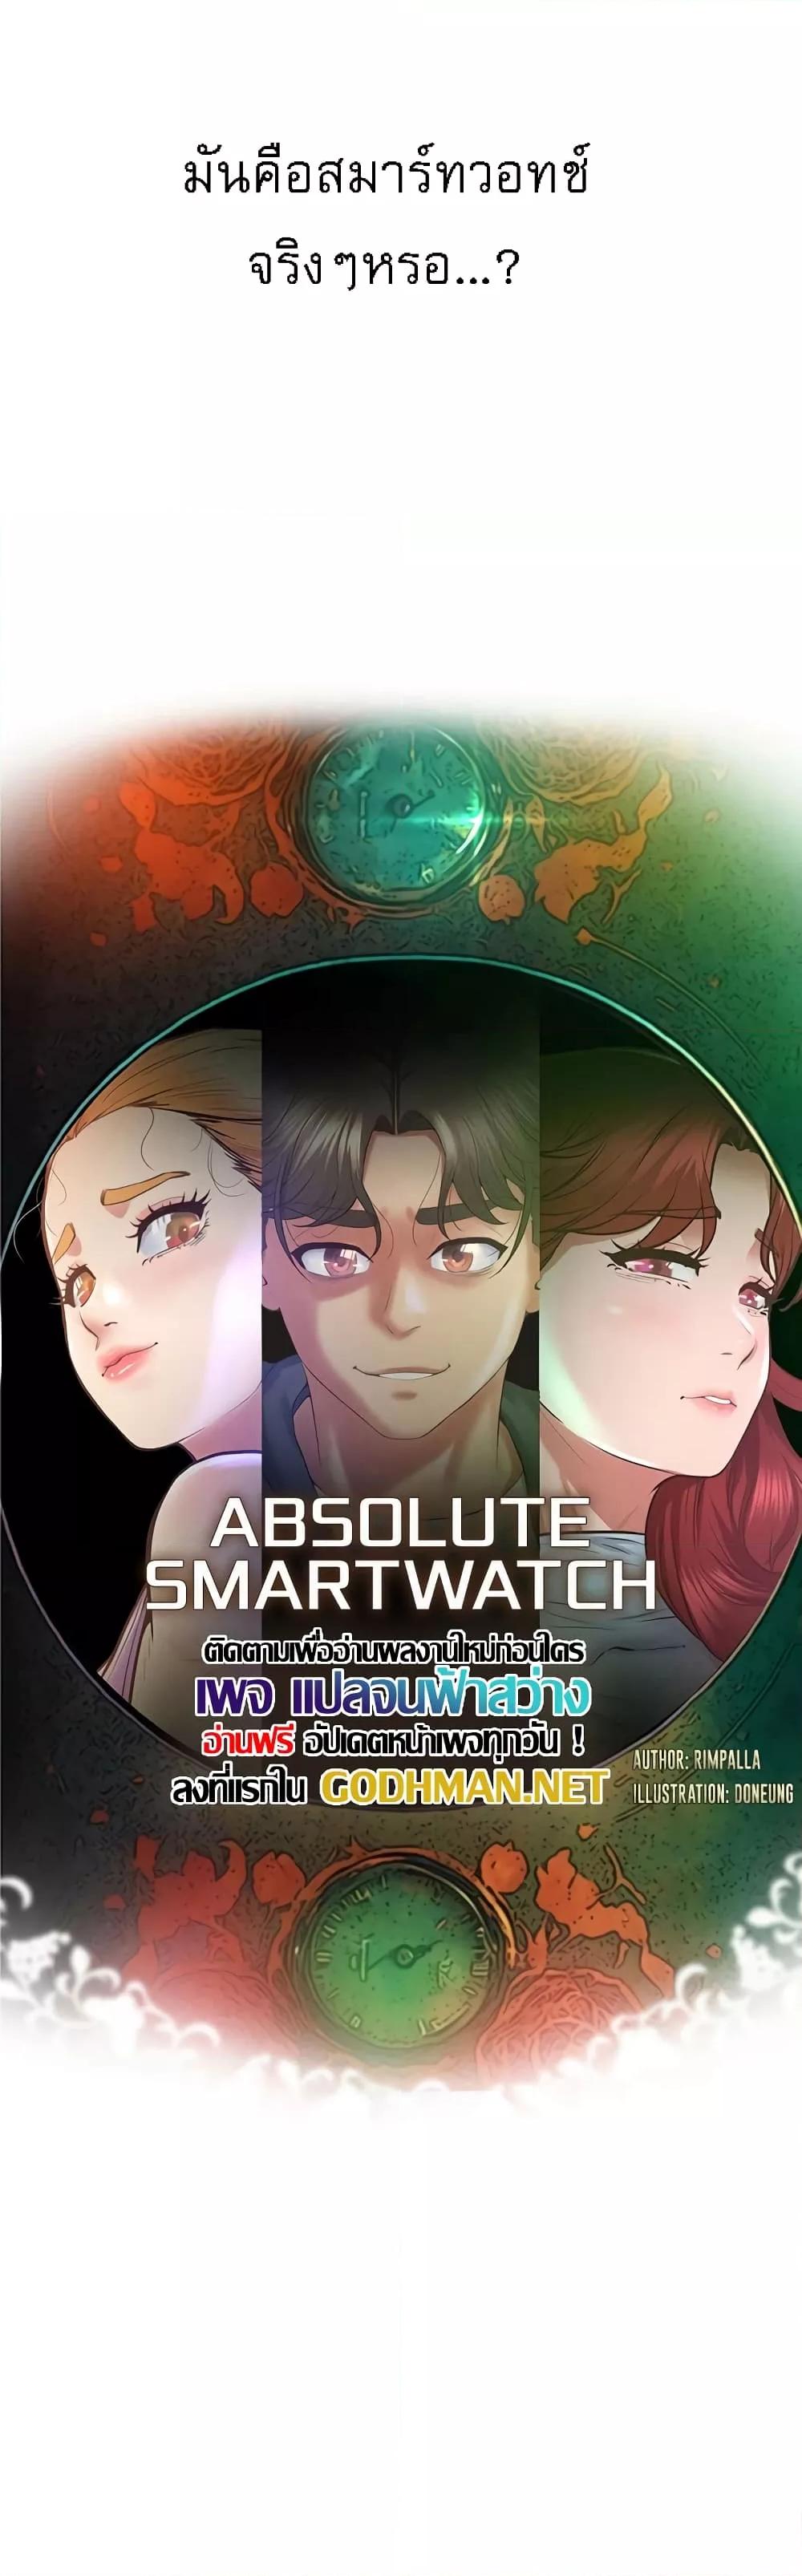 Absolute Smartwatch 3 (9)